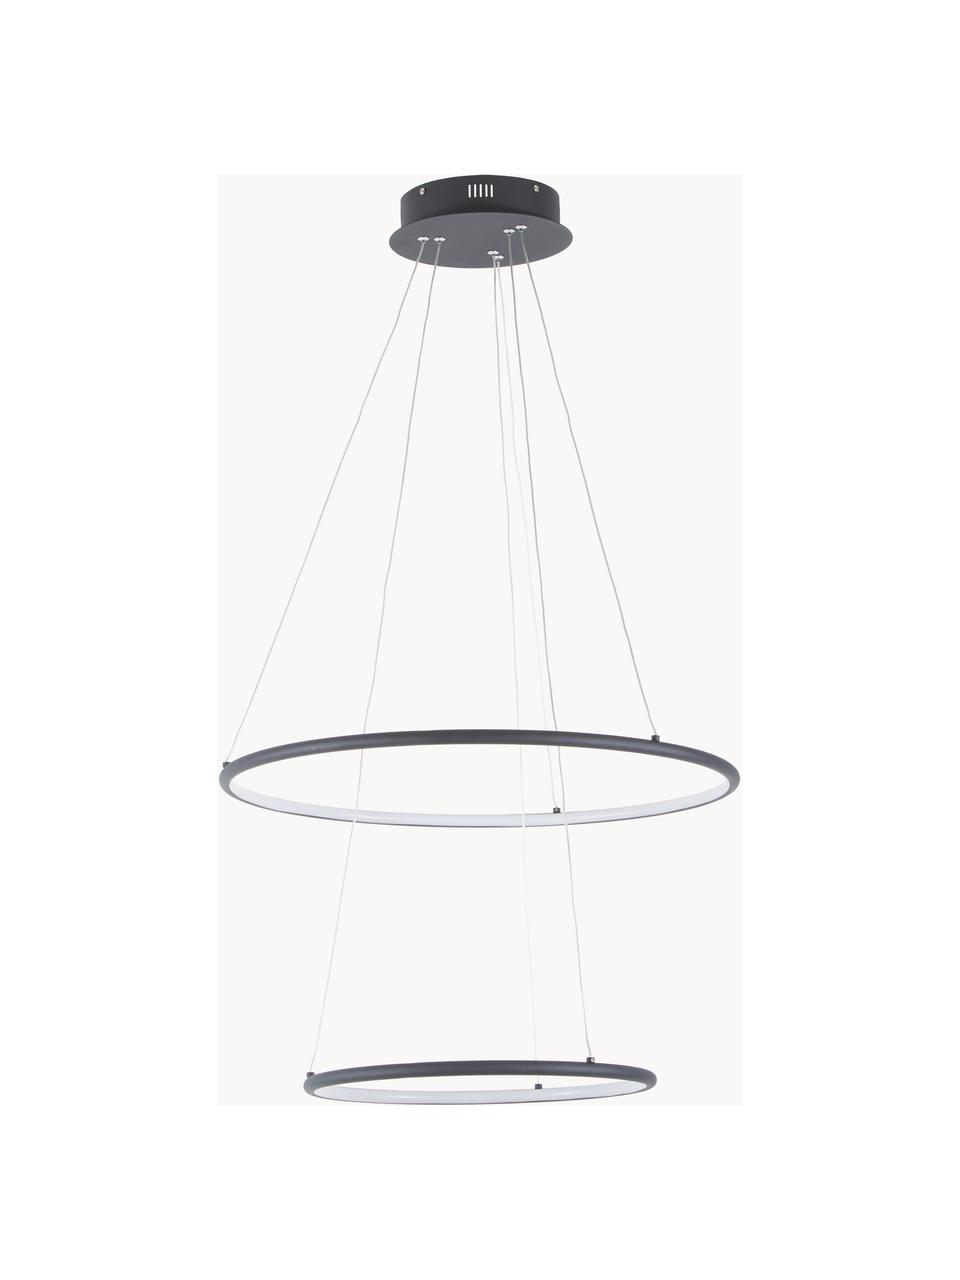 Grote LED hanglamp Orion, Lampenkap: gecoat metaal, Diffuser: acryl, Zwart, Ø 60 cm